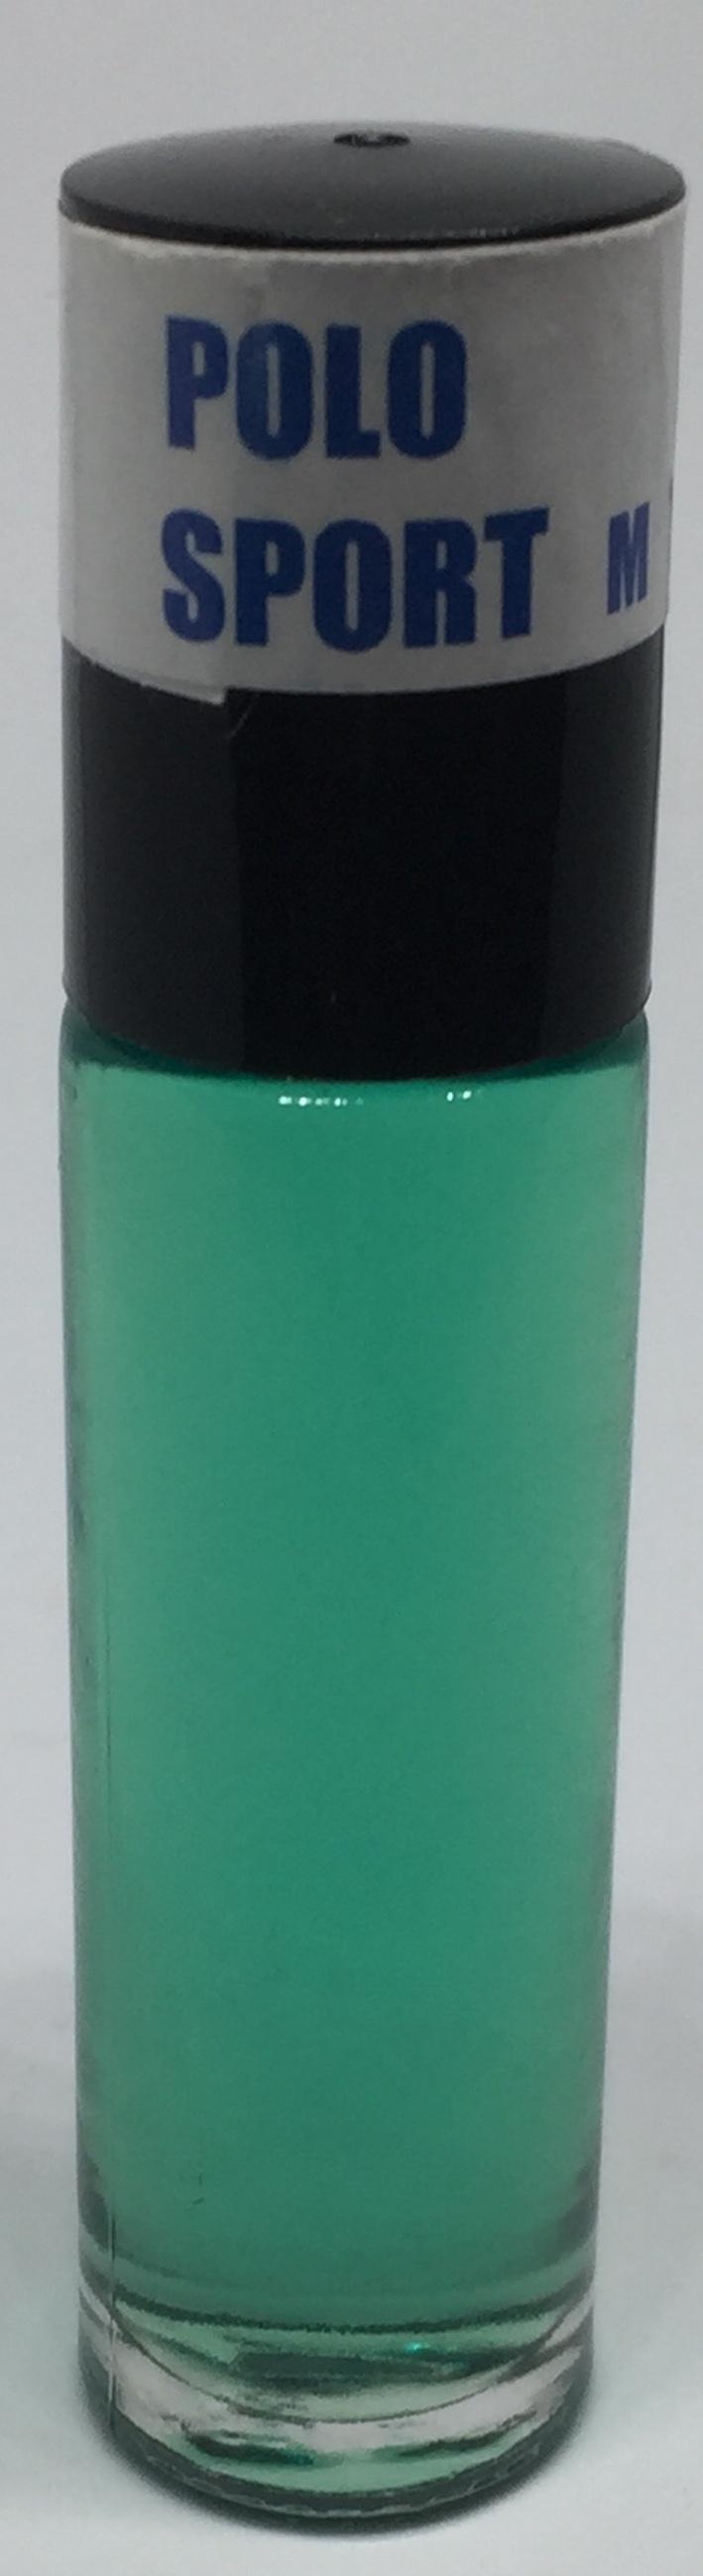 Polo Sport Fragrance(Perfume)Body Oil Men